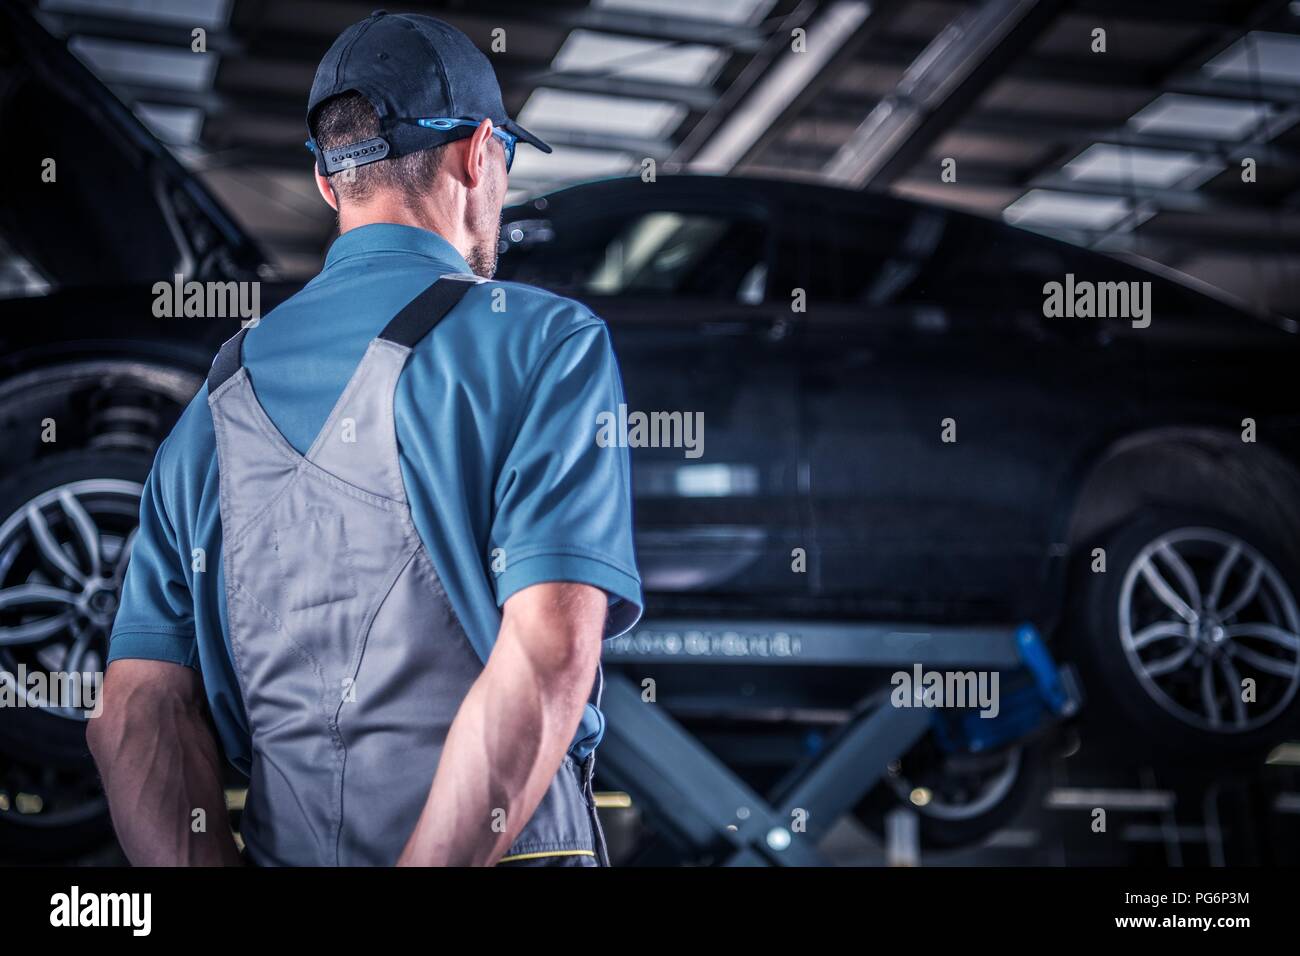 Caucasian Auto Service Mechanics Supervisor on Duty. Stock Photo